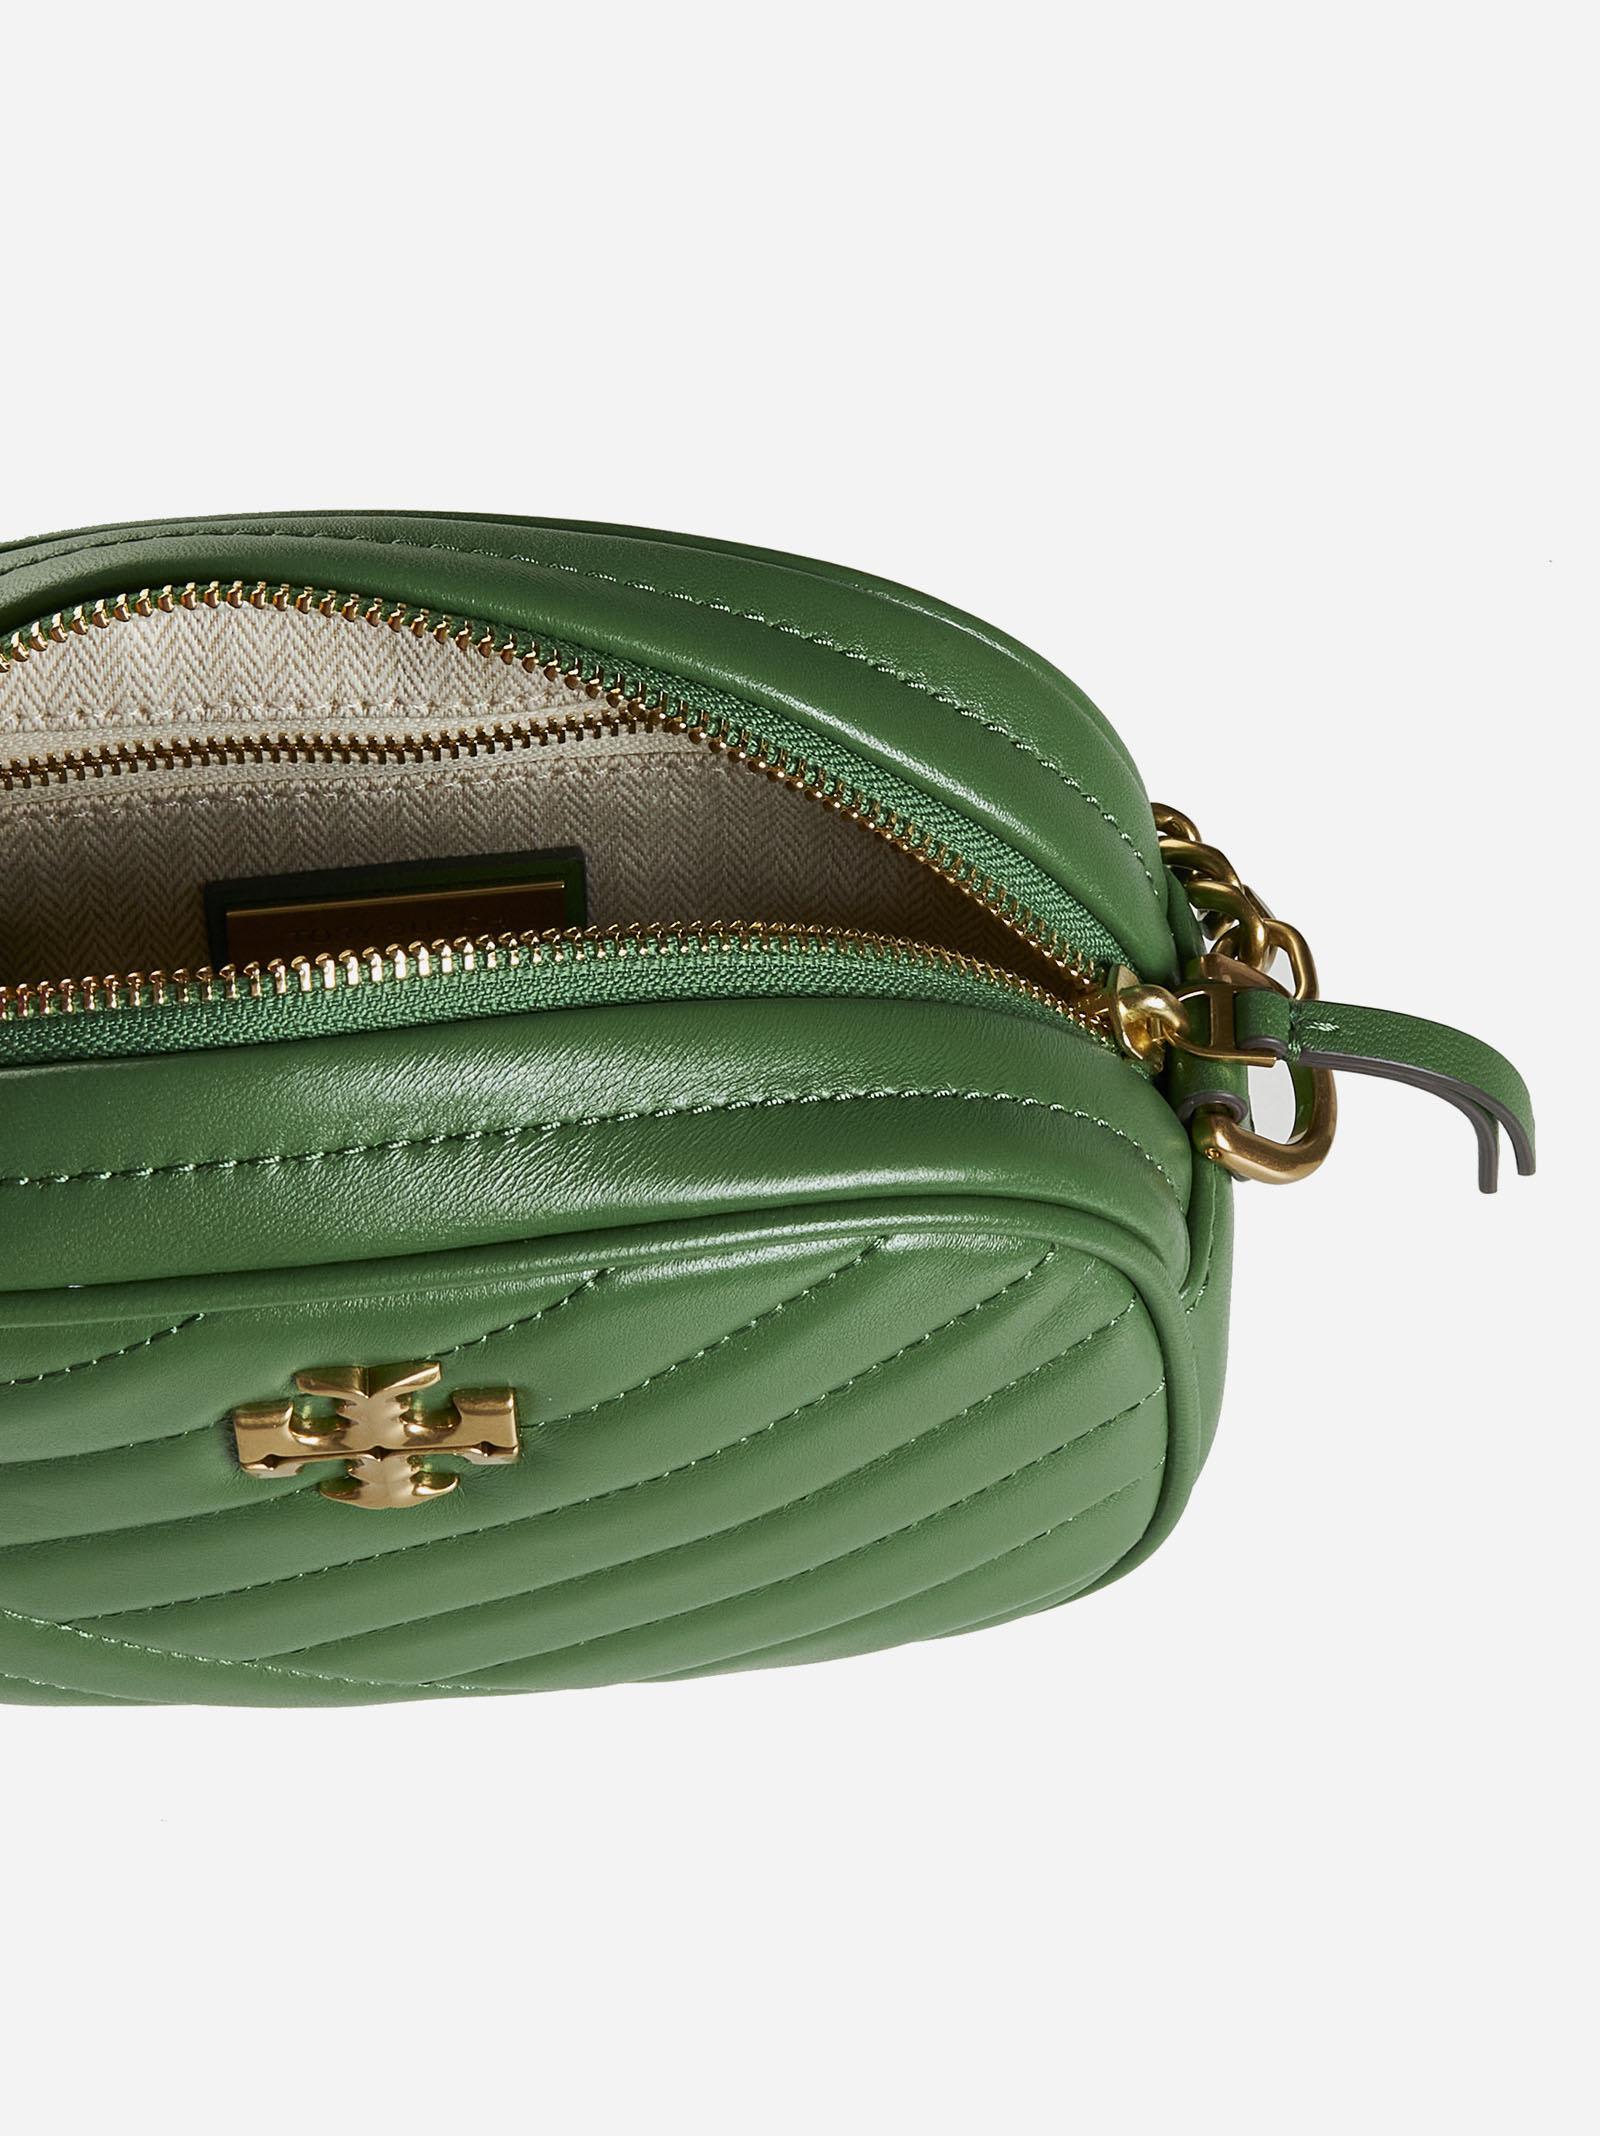 Kira Chevron Small shoulder bag in basil green leather